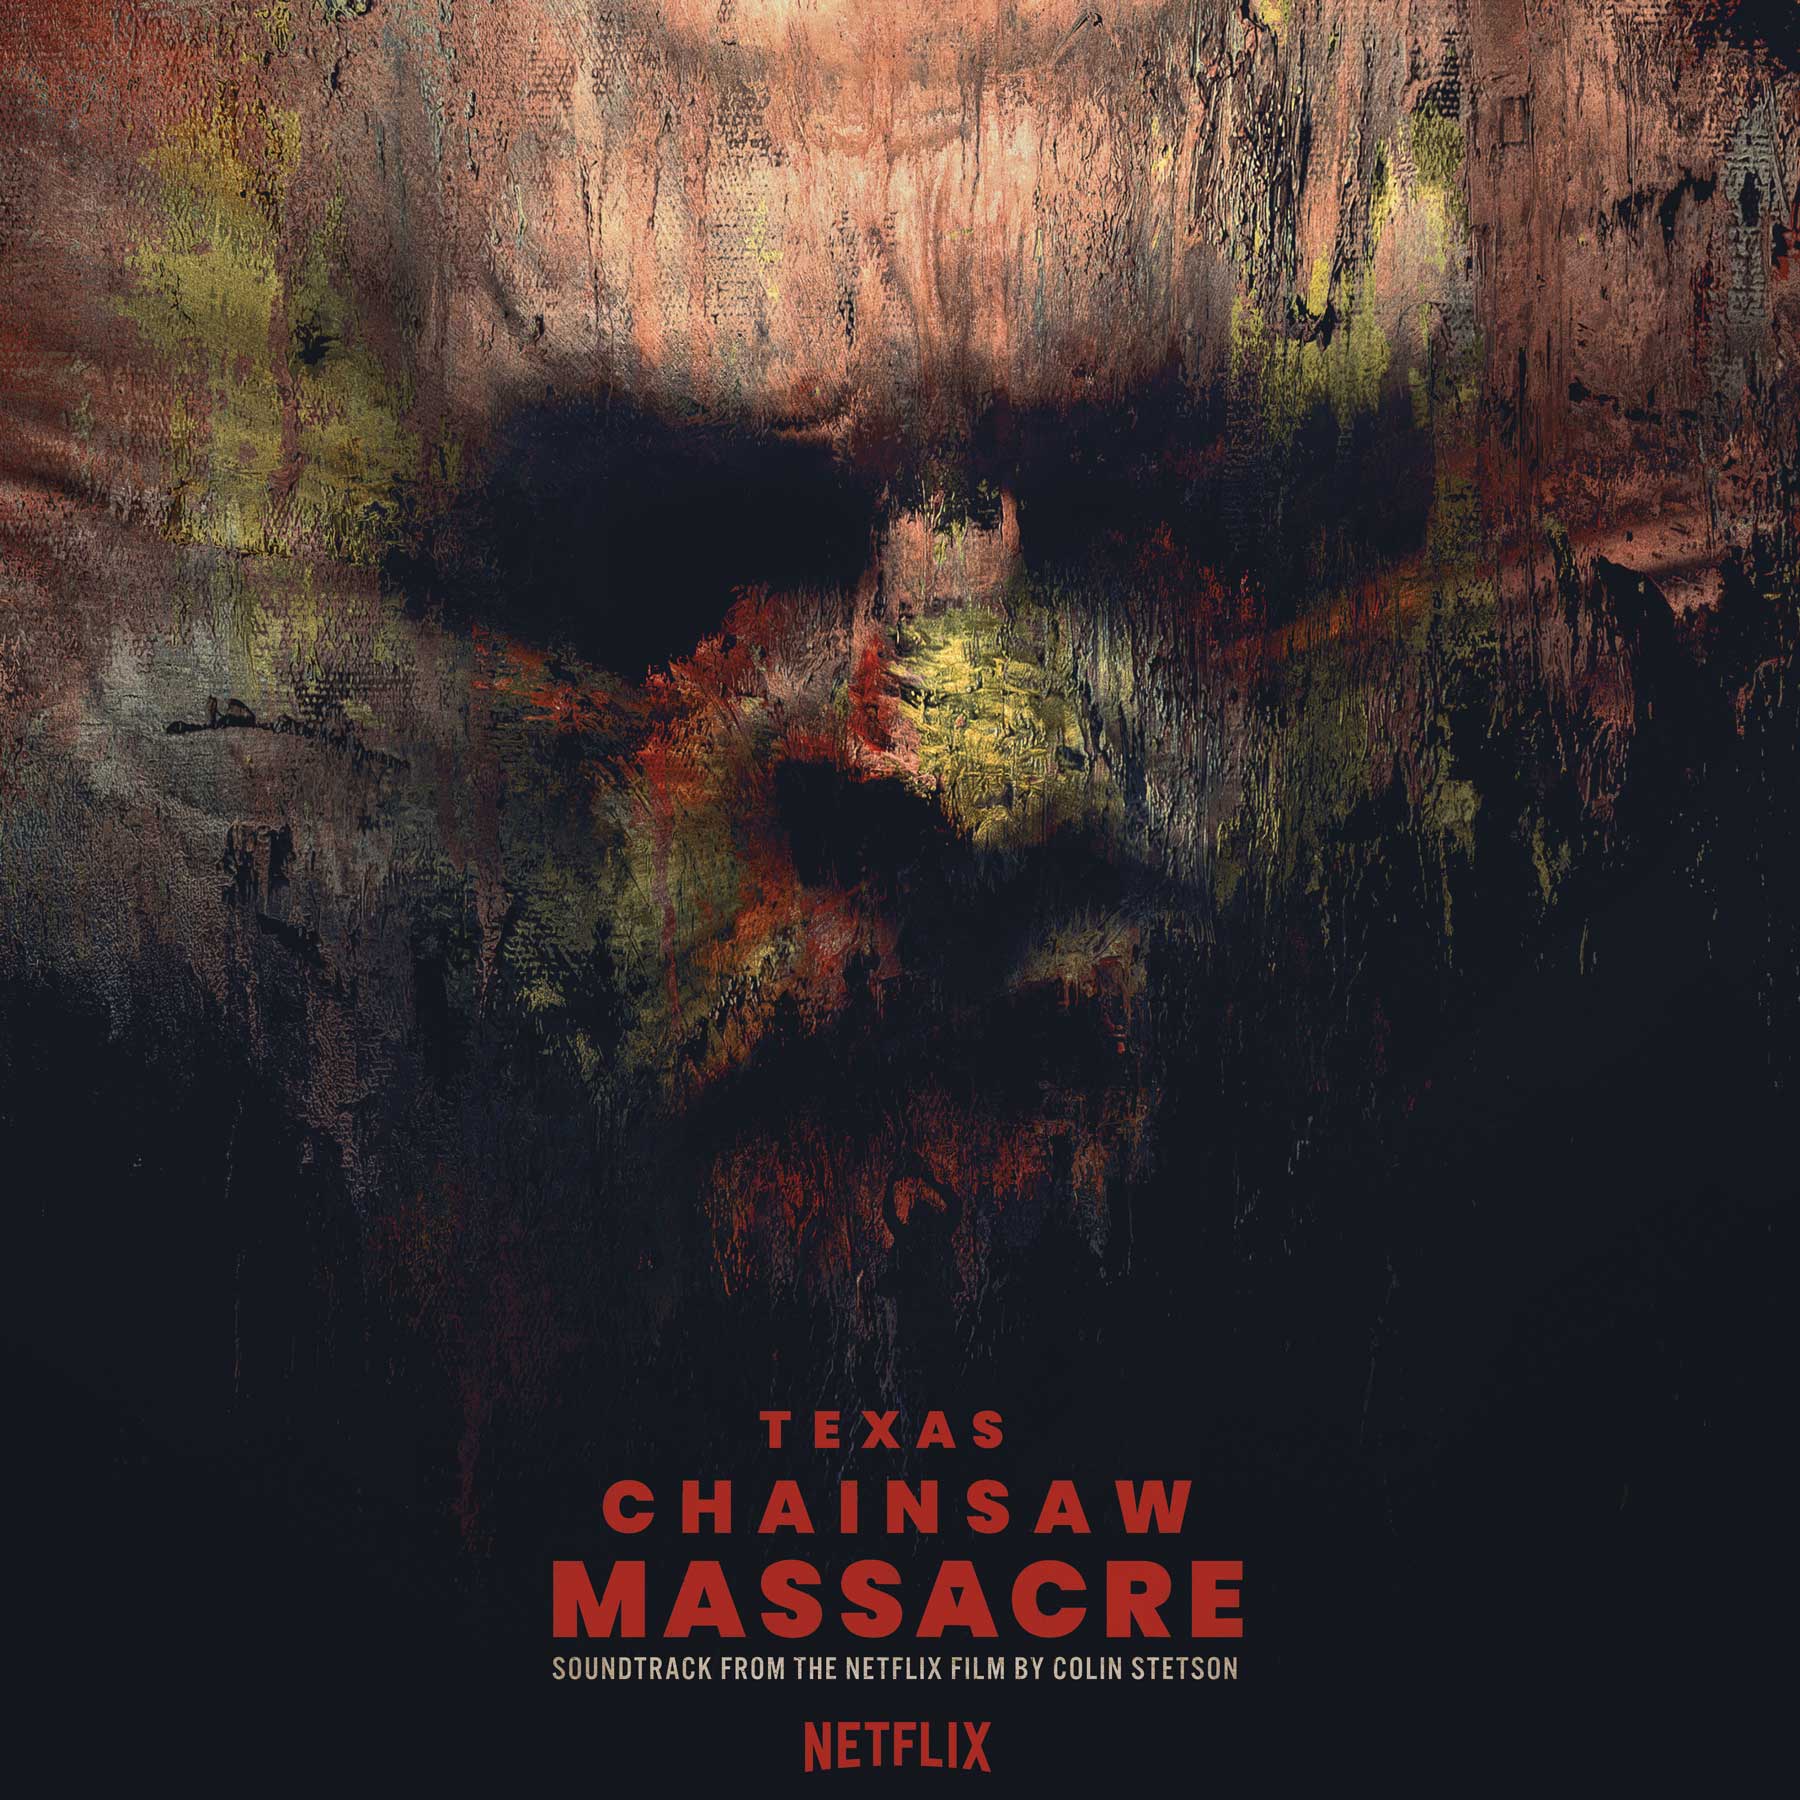 COLIN STETSON - TEXAS CHAINSAW MASSACRE OST Vinyl LP